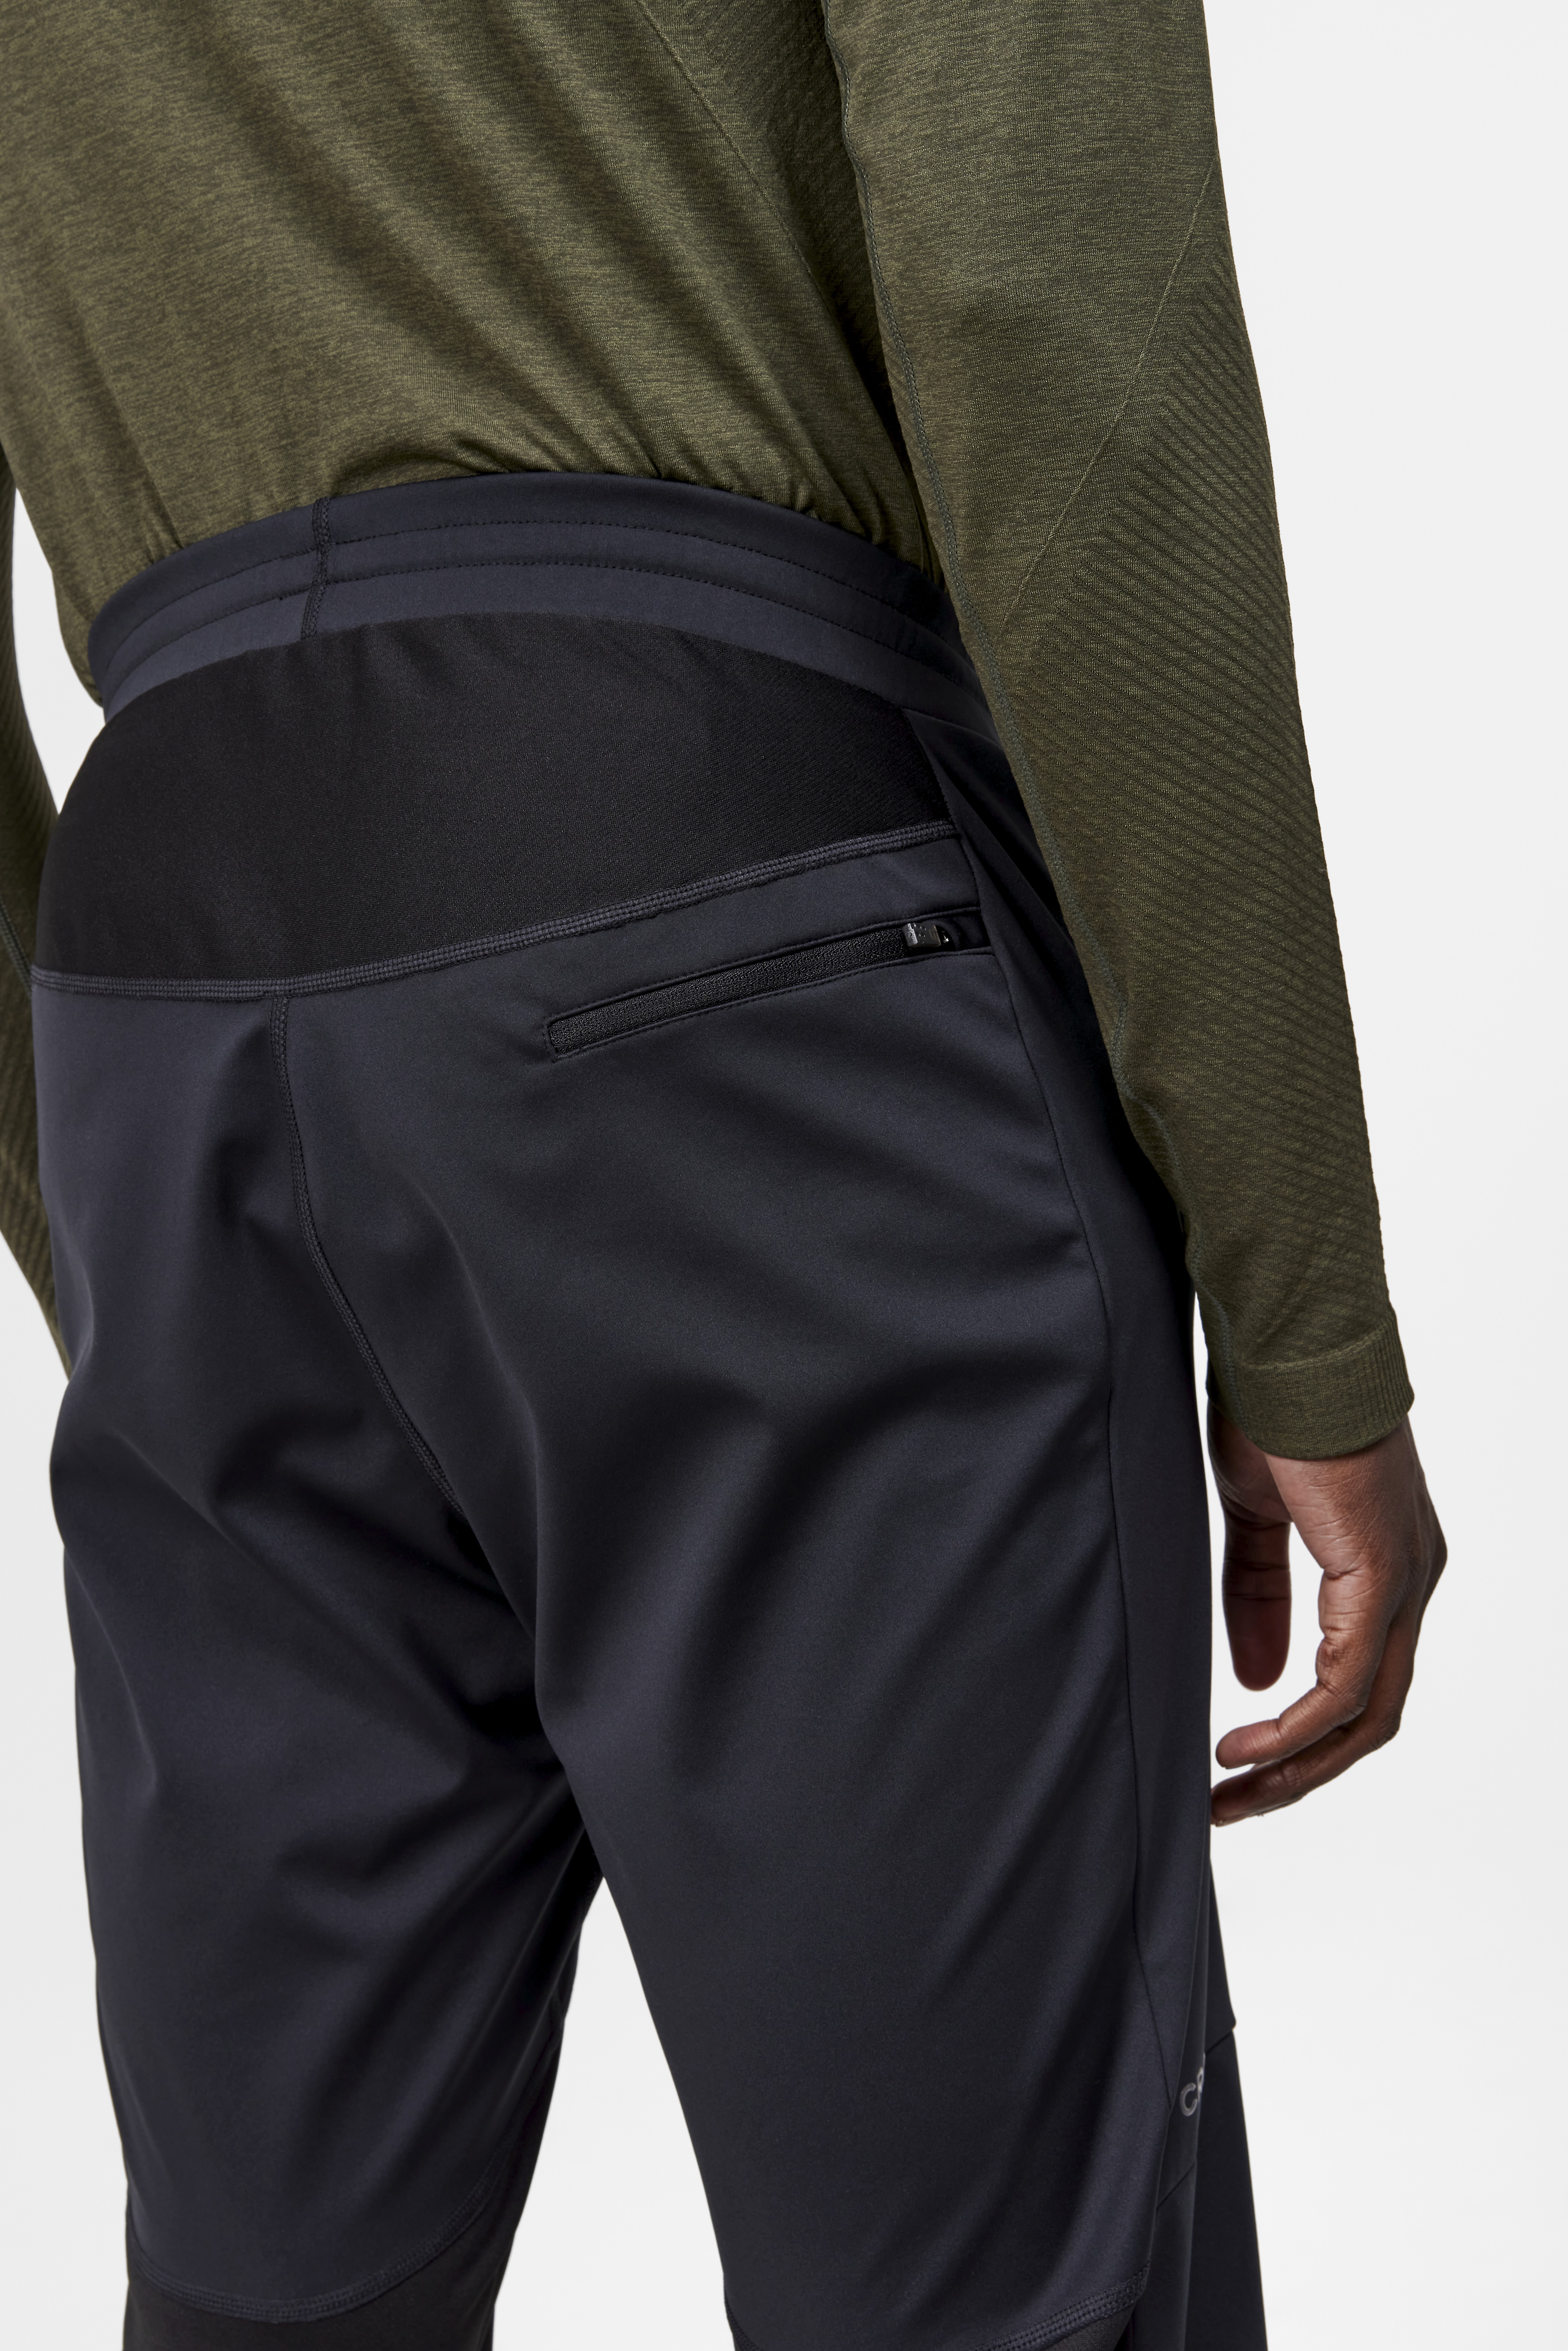 Men's Regular Fit Straight Cargo Pants - Goodfellow & Co™ Black 30x30